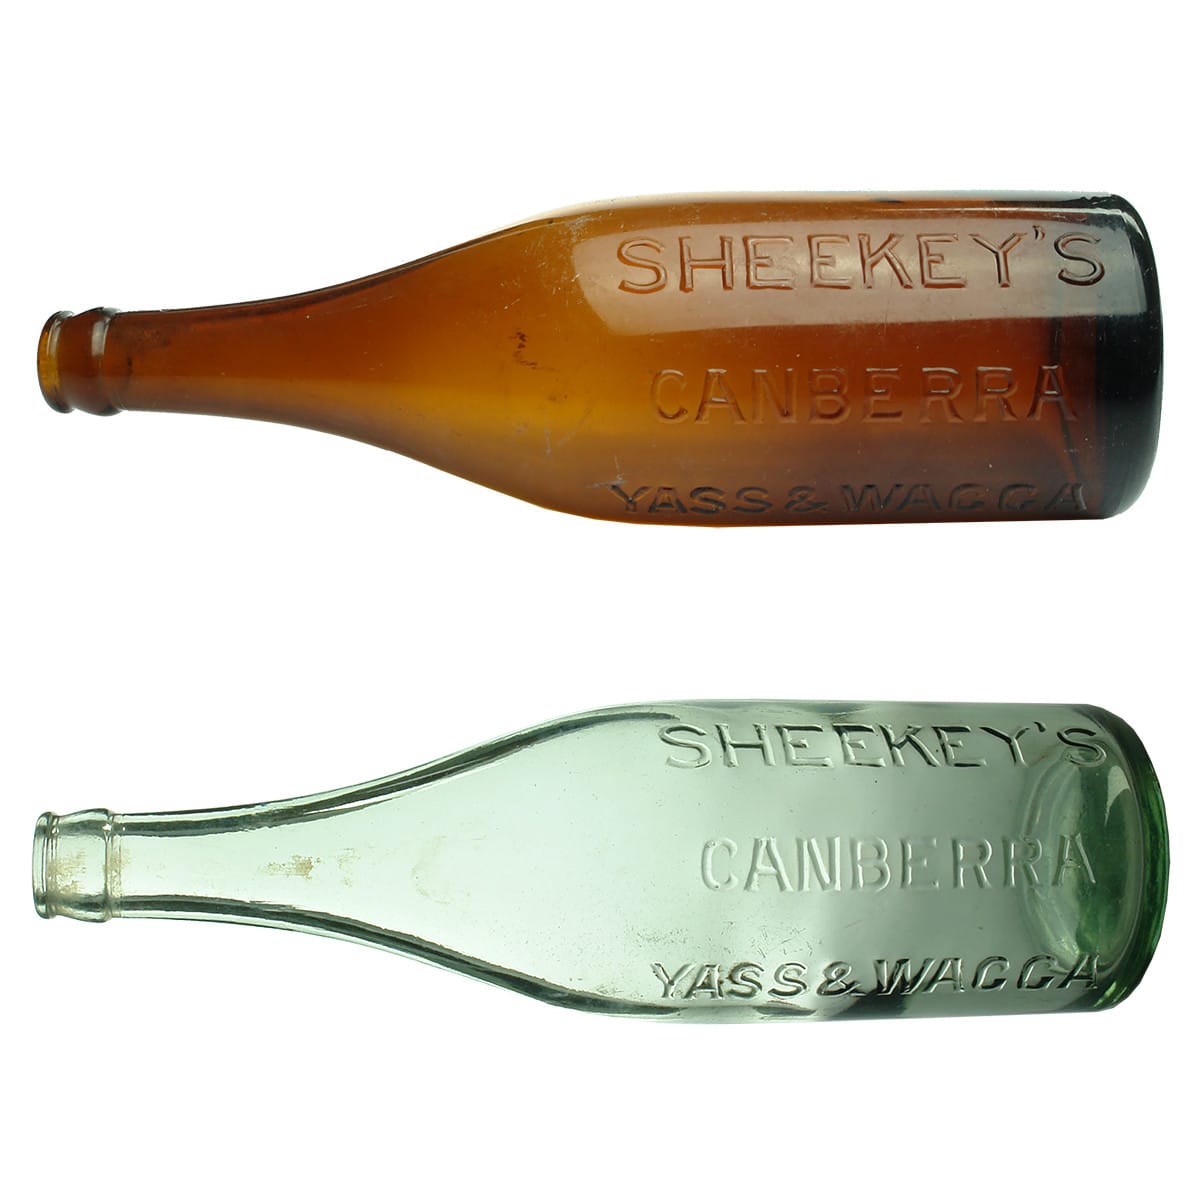 2 Crown Seals. Sheekey's, Canberra, Yass & Wagga. Amber & Aqua. 24 oz. (New South Wales & ACT)